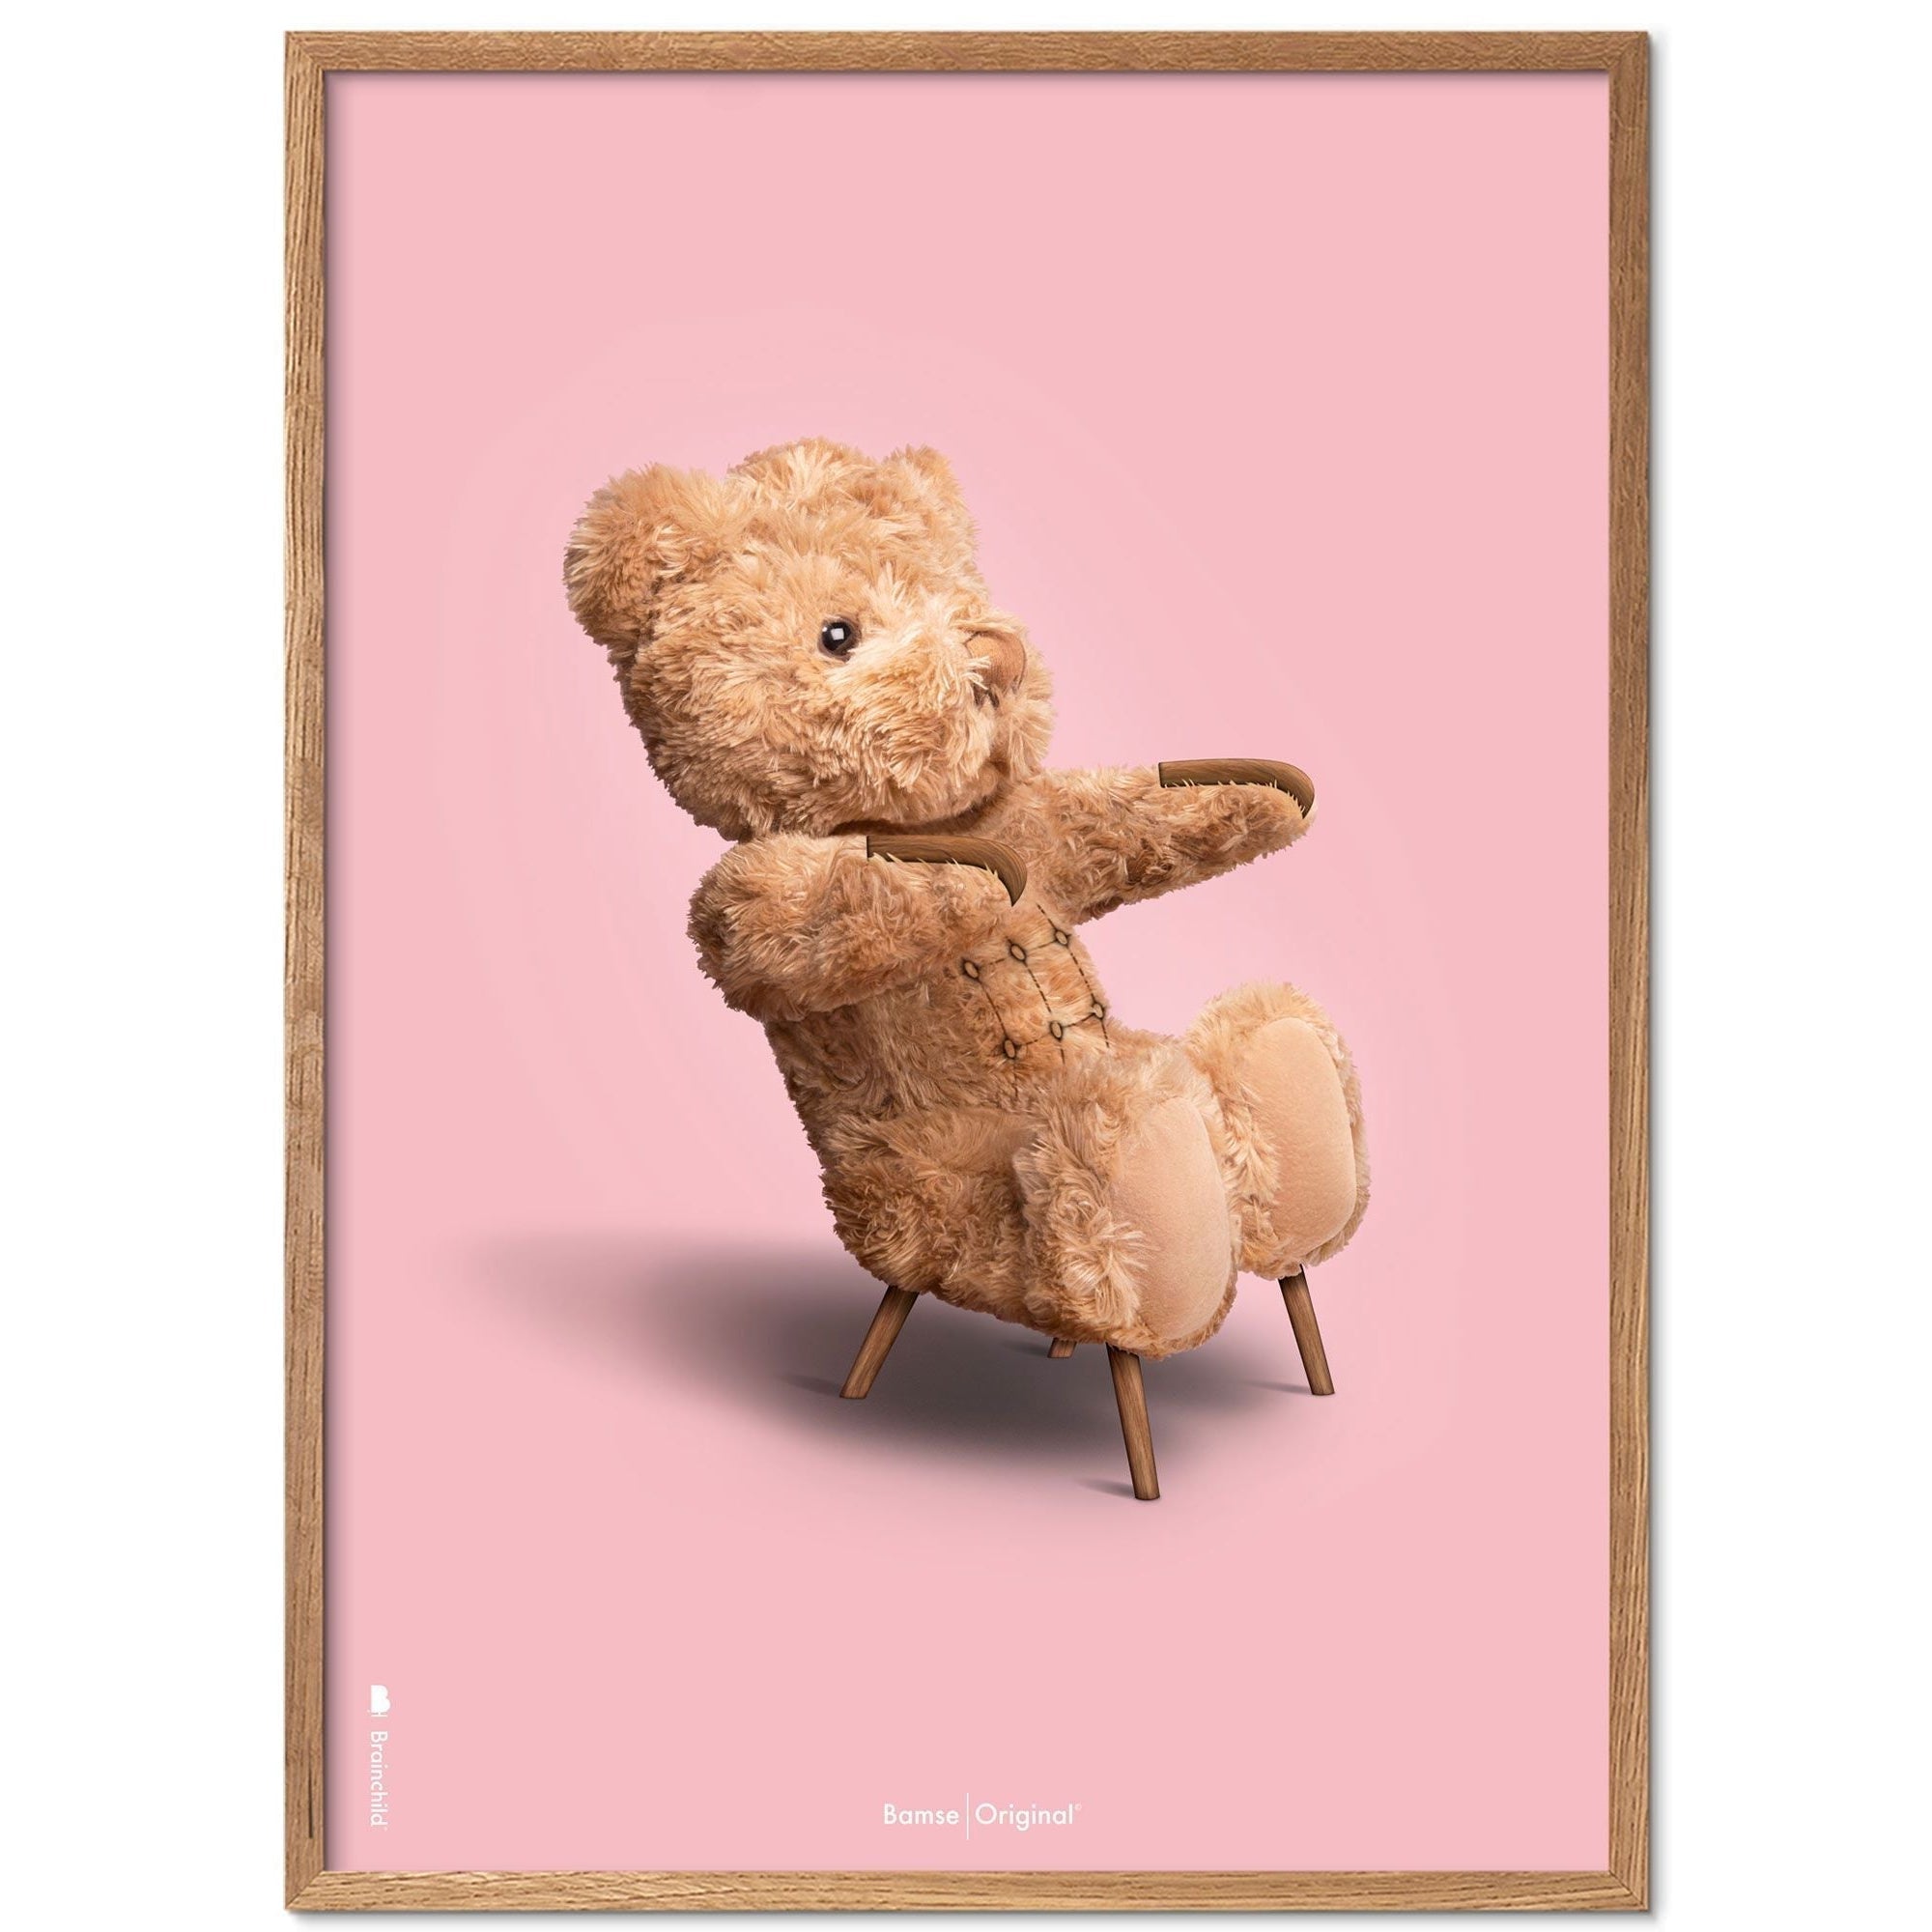 Brainchild Teddybär Classic Poster heller Holzrahmen Ramme A5, rosa Hintergrund